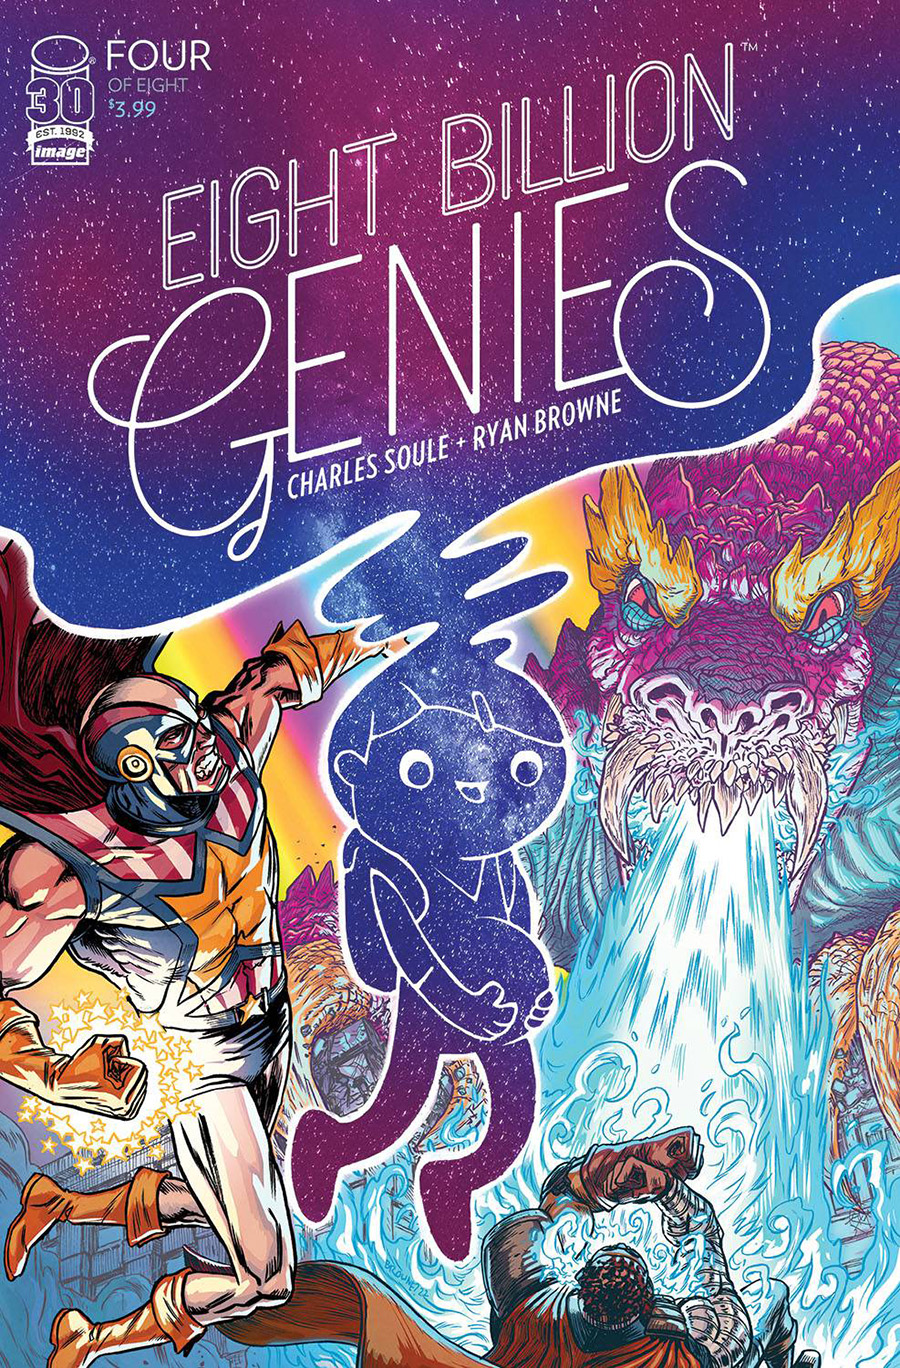 Eight Billion Genies #4 Cover A Regular Ryan Browne Cover (Limit 1 Per Customer)